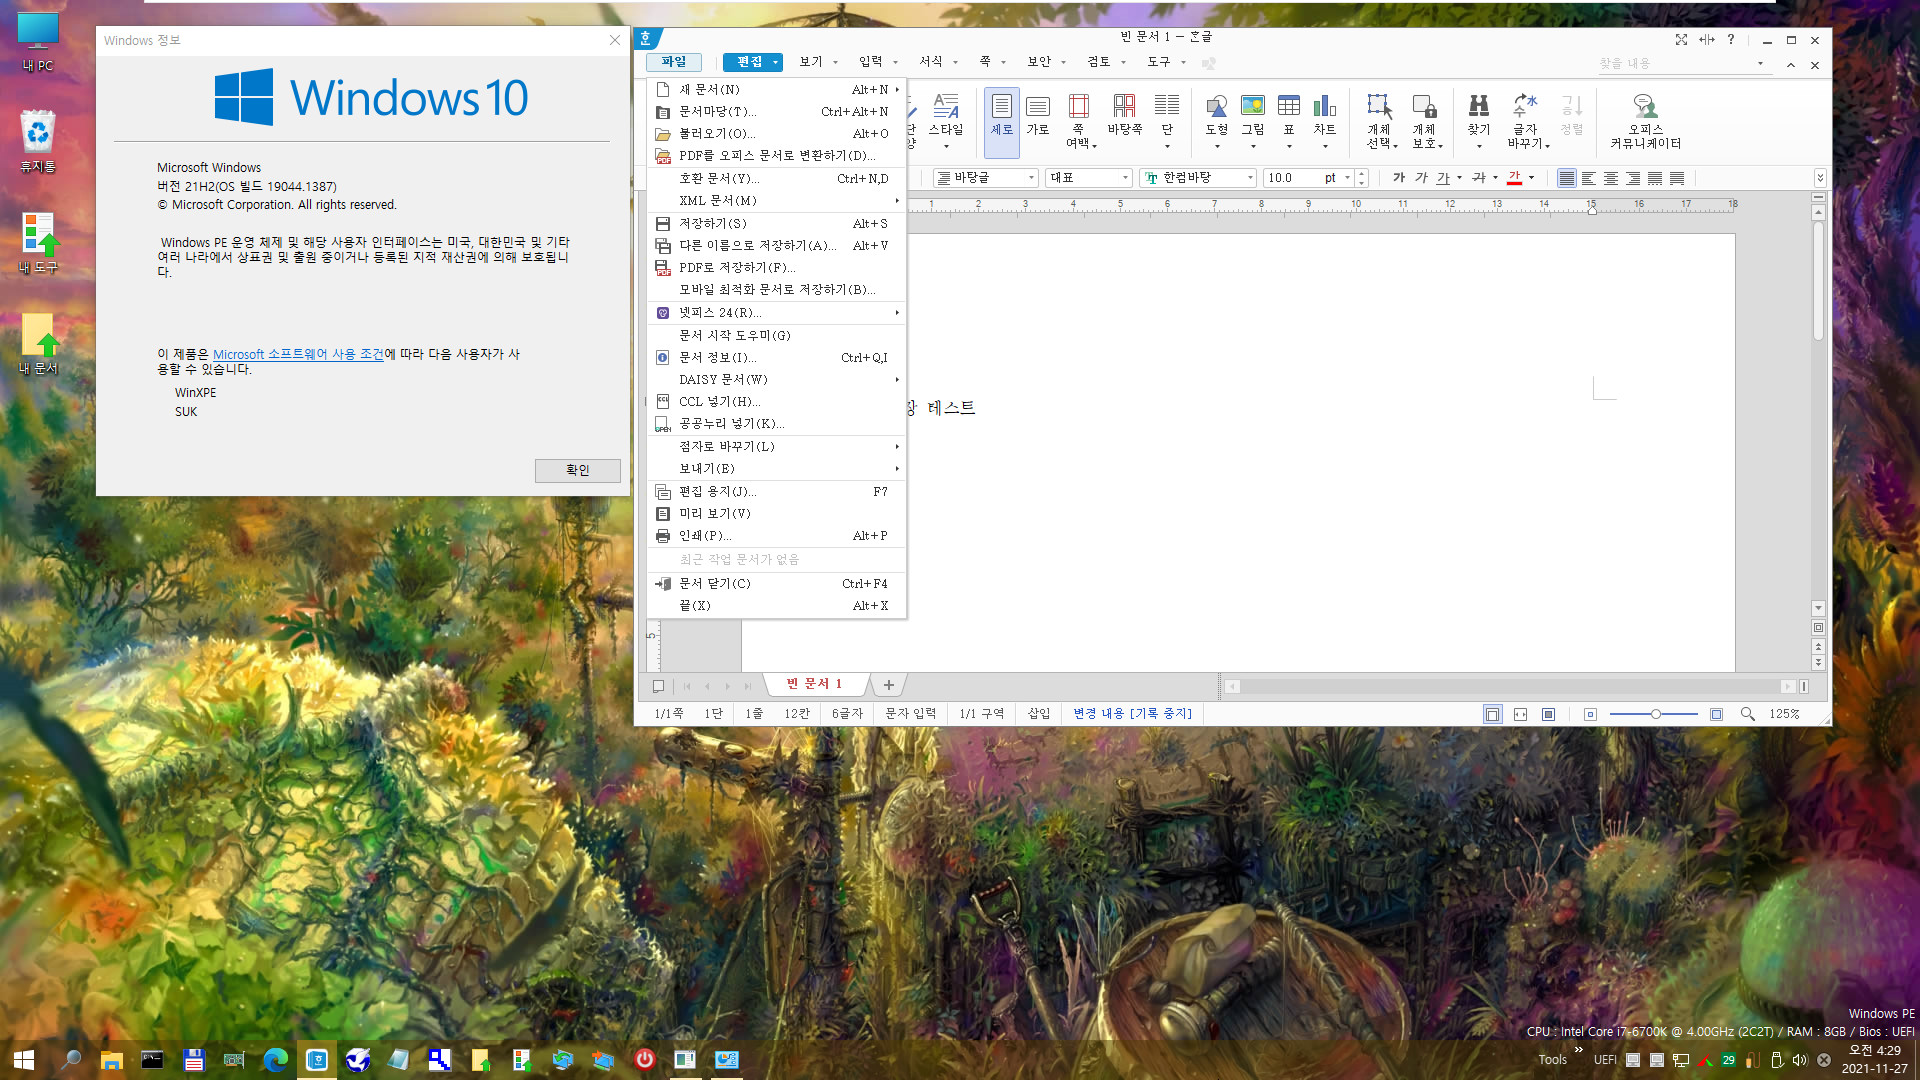 WindowsXPE130 + Windows_10_PRO_x64_[v21H1_19043.1387+v21H2_19044.1387]_2021-11-23.iso - PE 만들기 + HNC2018 추가 테스트 - 저장까지 됩니다 2021-11-27_042934.jpg